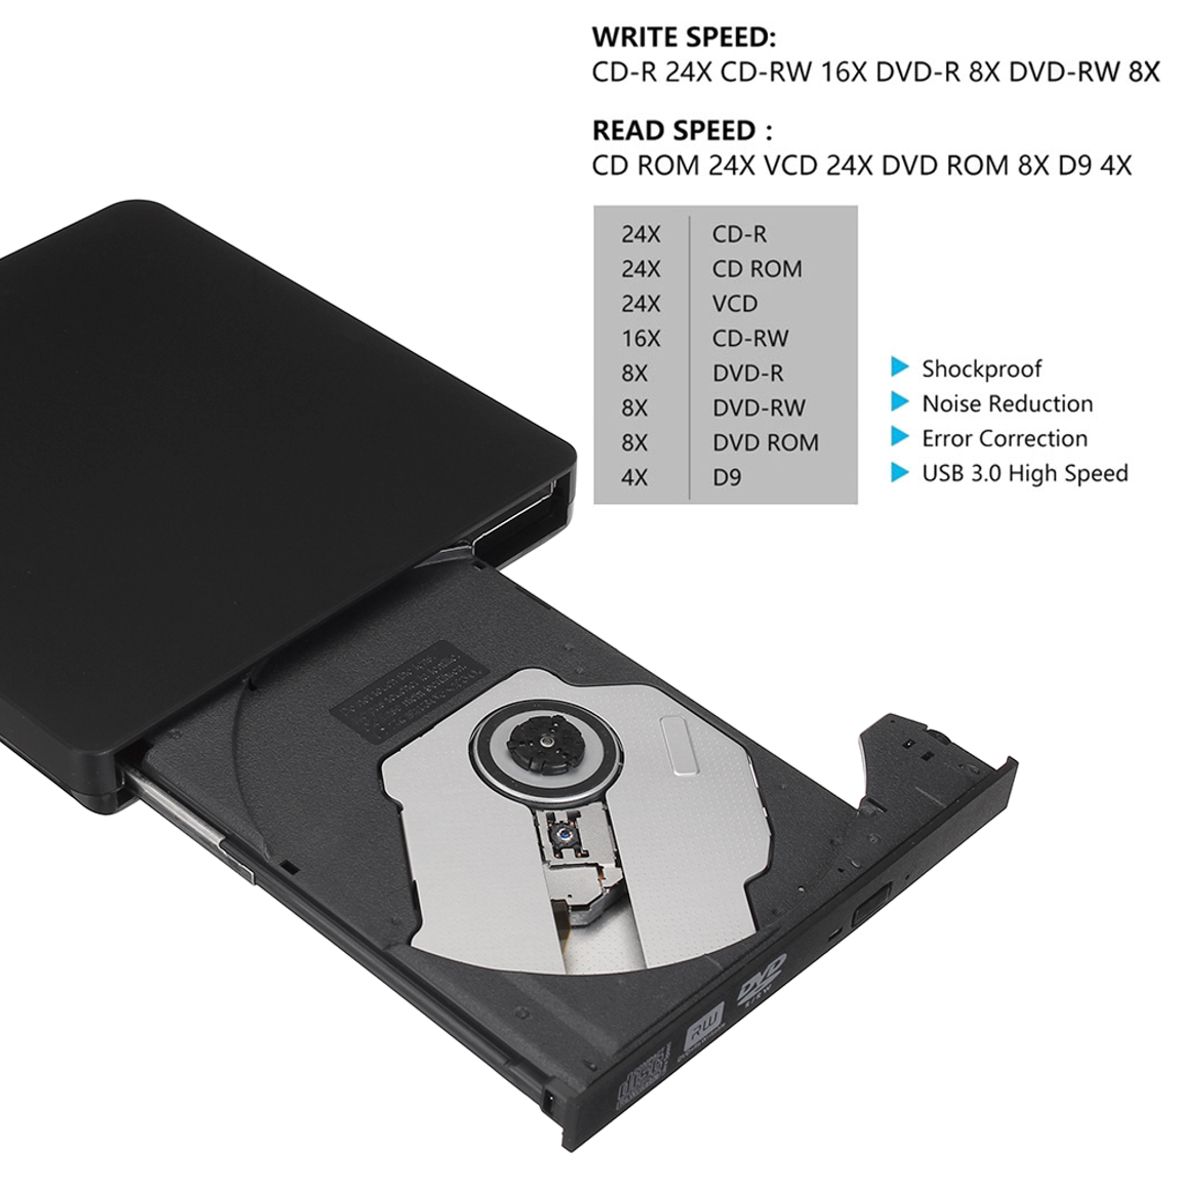 USB-30-Optical-Drive-Slim-External-DVD-Drive-DVD-RW-CD-RW-Combo-Drive-Burner-Reader-Player-1611767